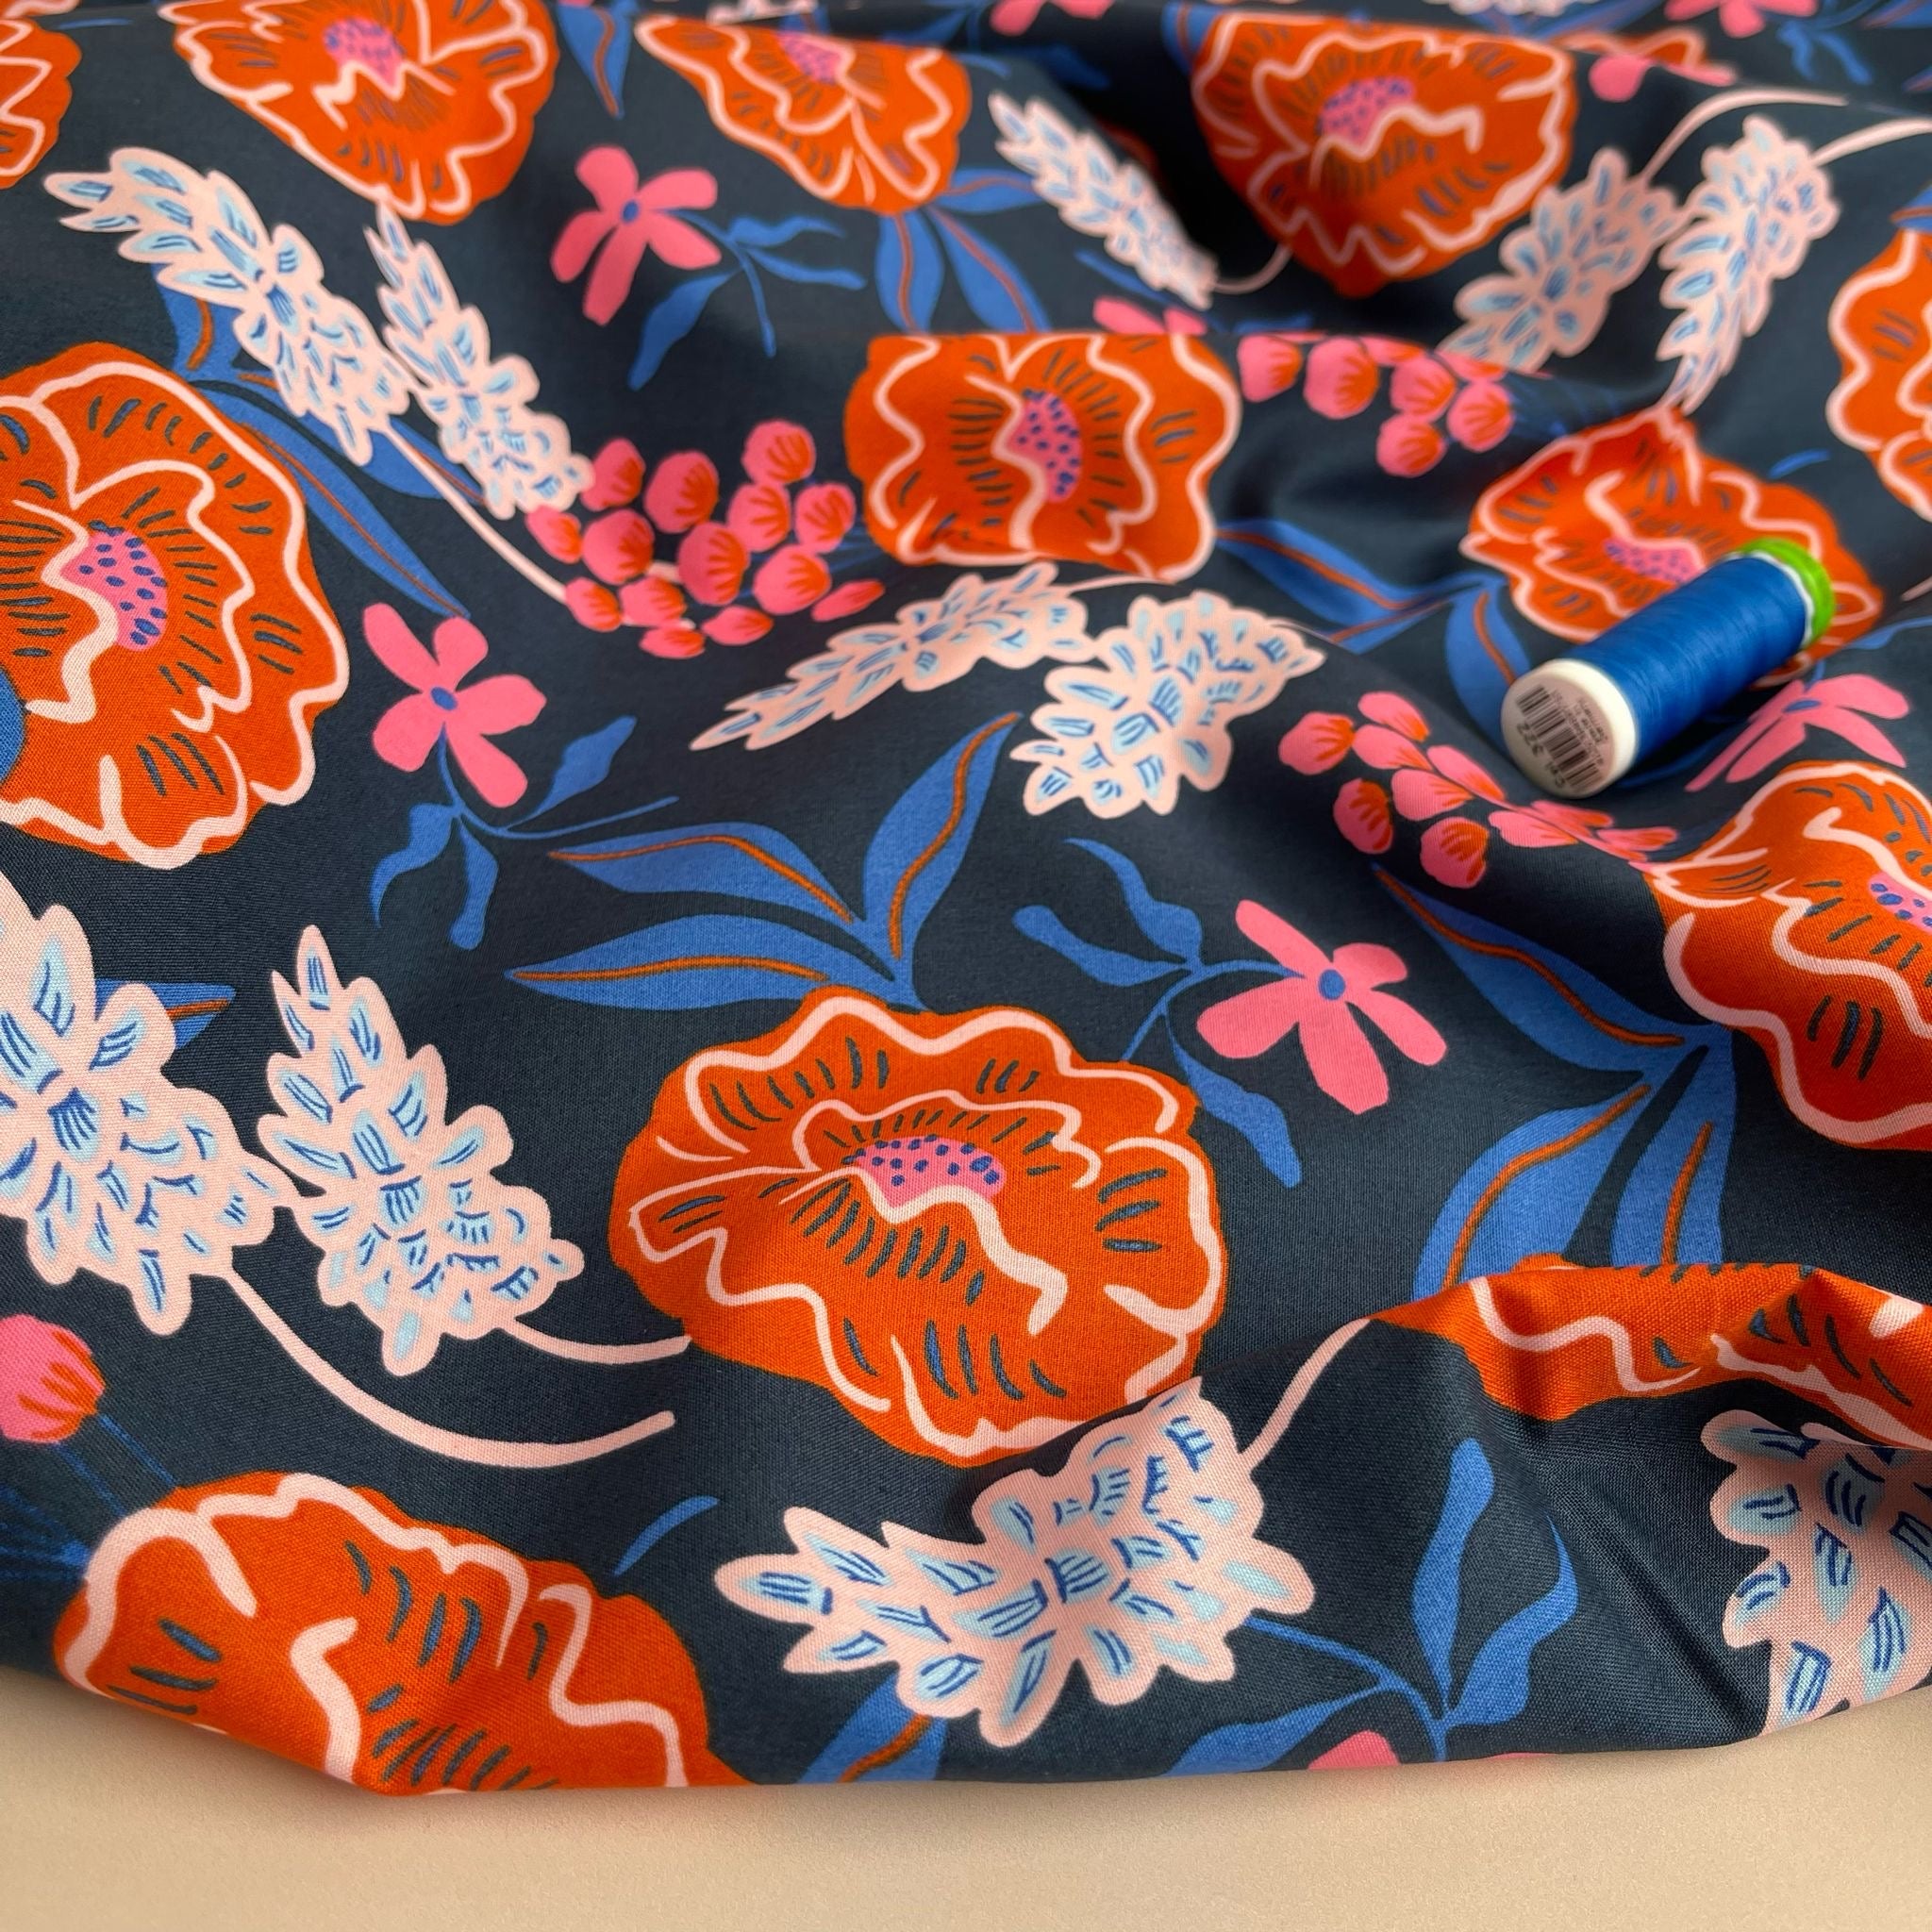 Nerida Hansen - Fresh Flowers on Navy Cotton Poplin Fabric